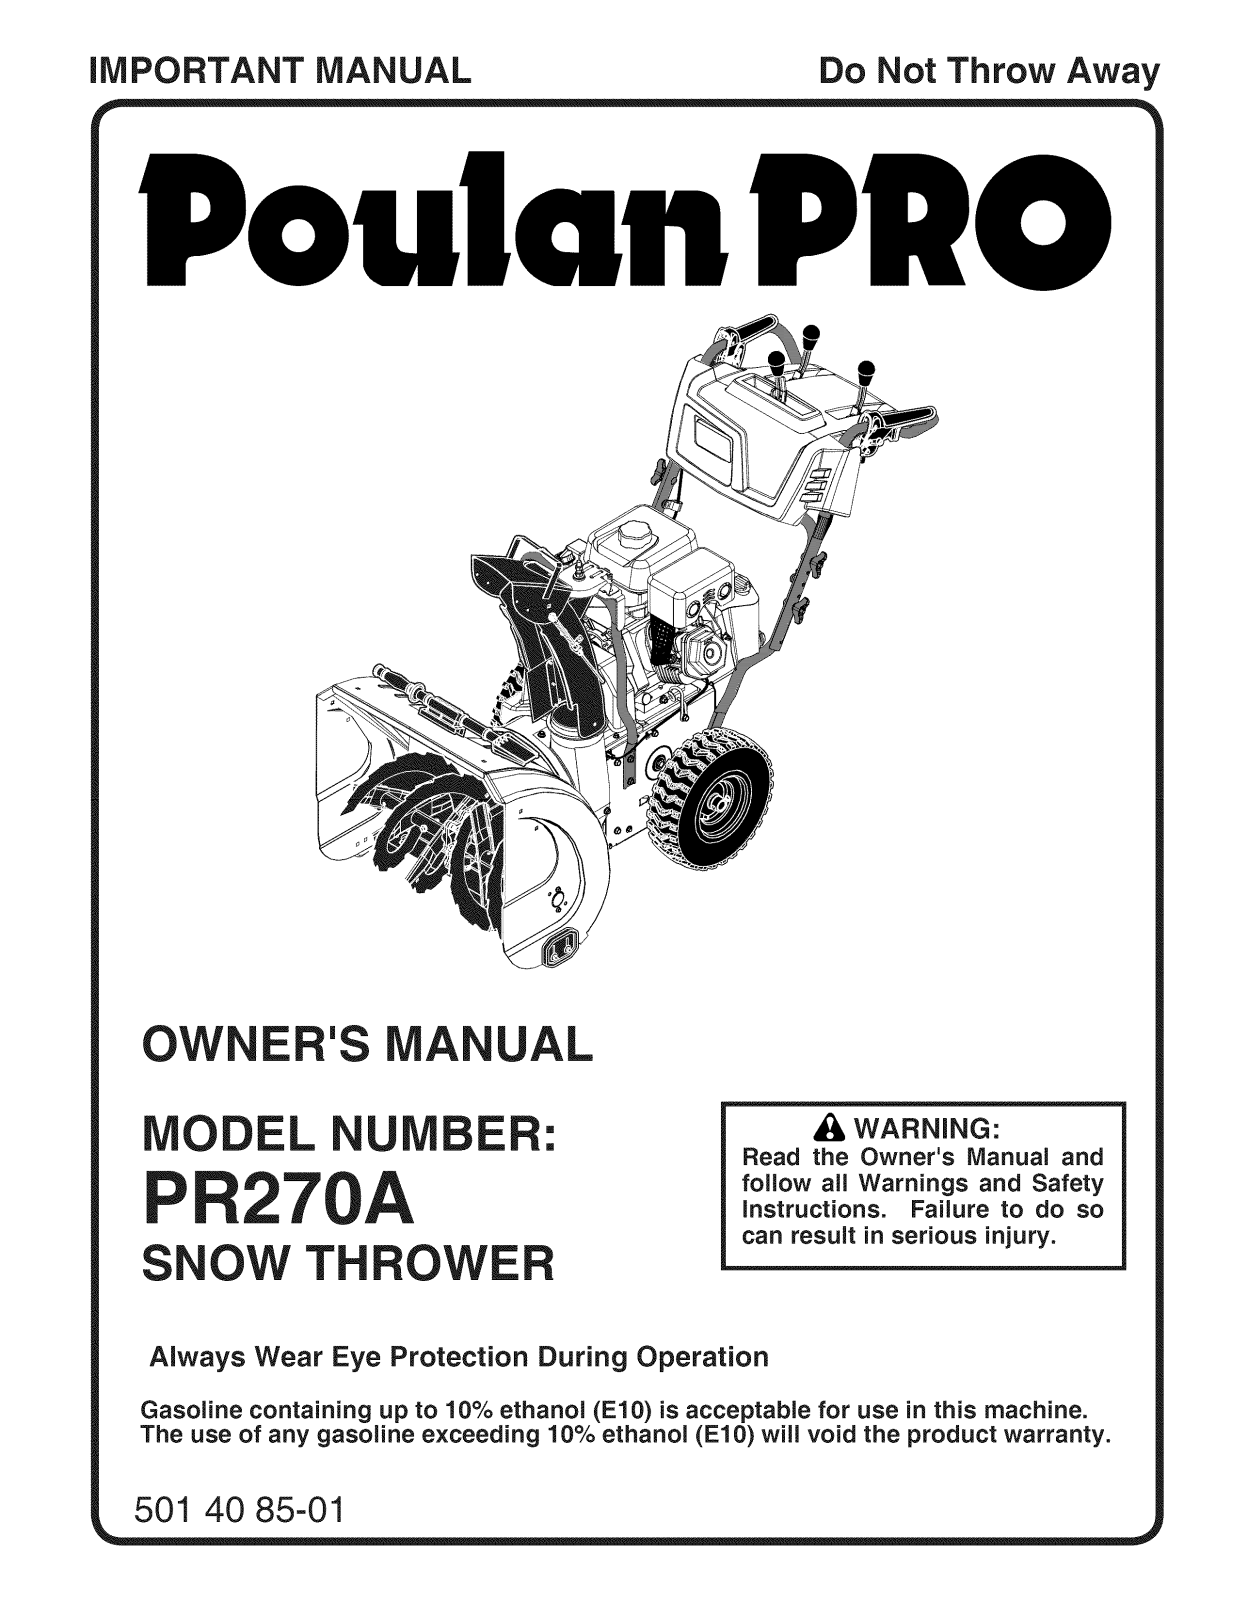 Poulan PR270A-96192009600, 96192009600 Owner’s Manual